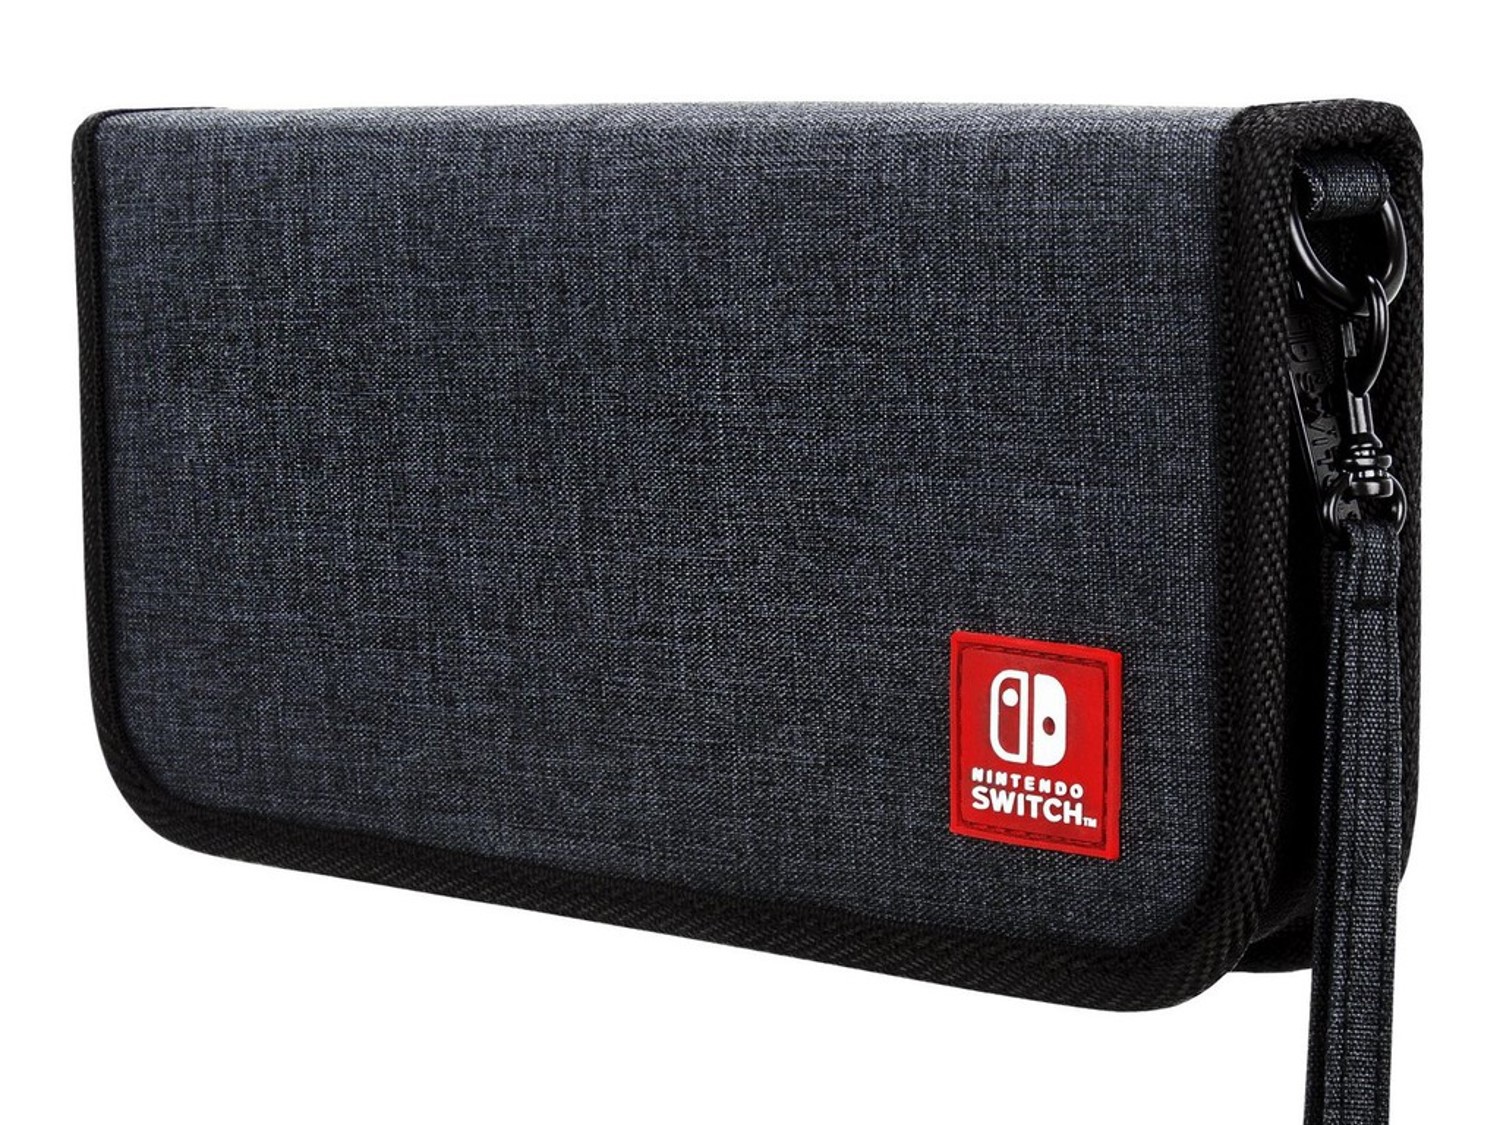 Nintendo Switch Carrying Case - Grey - Nintendo Switch Hardware